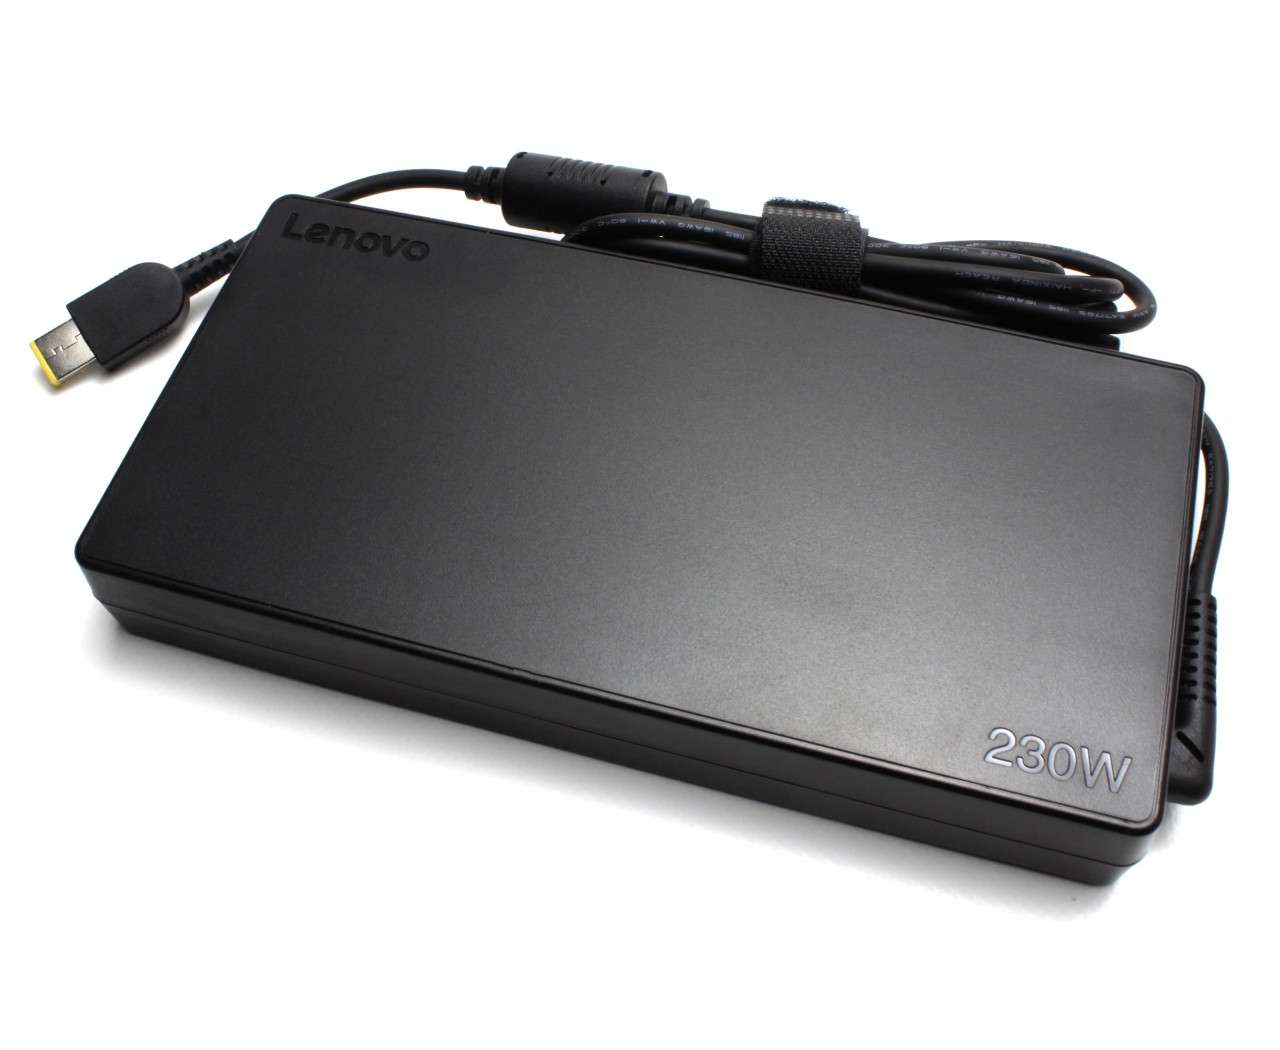 Incarcator Lenovo IdeaPad Y900-17ISK Square Shape 230W